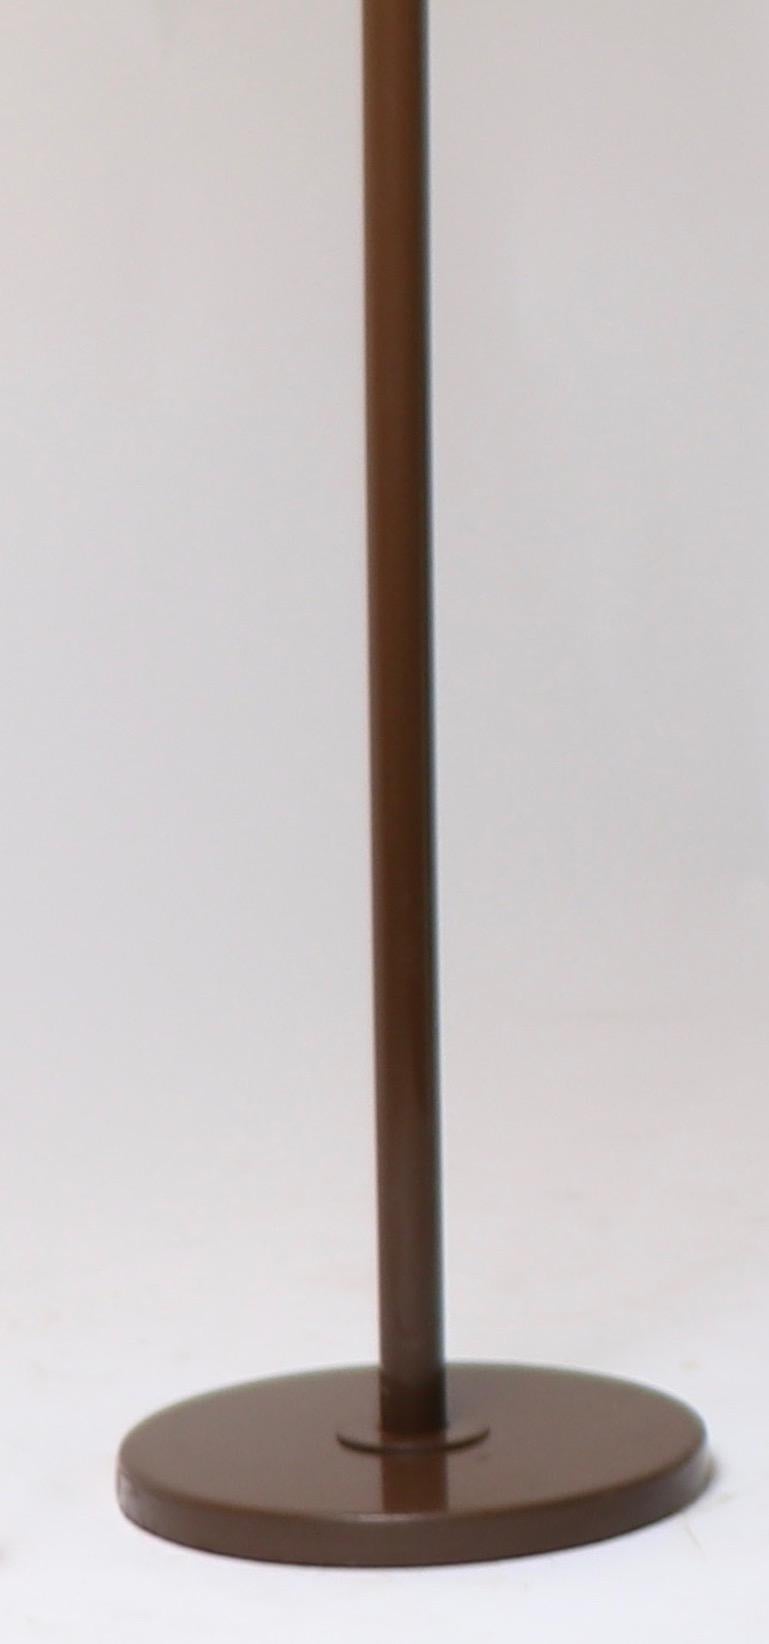 Mod Three-Light Floor Lamp Designed by Gerald Thurston for Lightolier 3